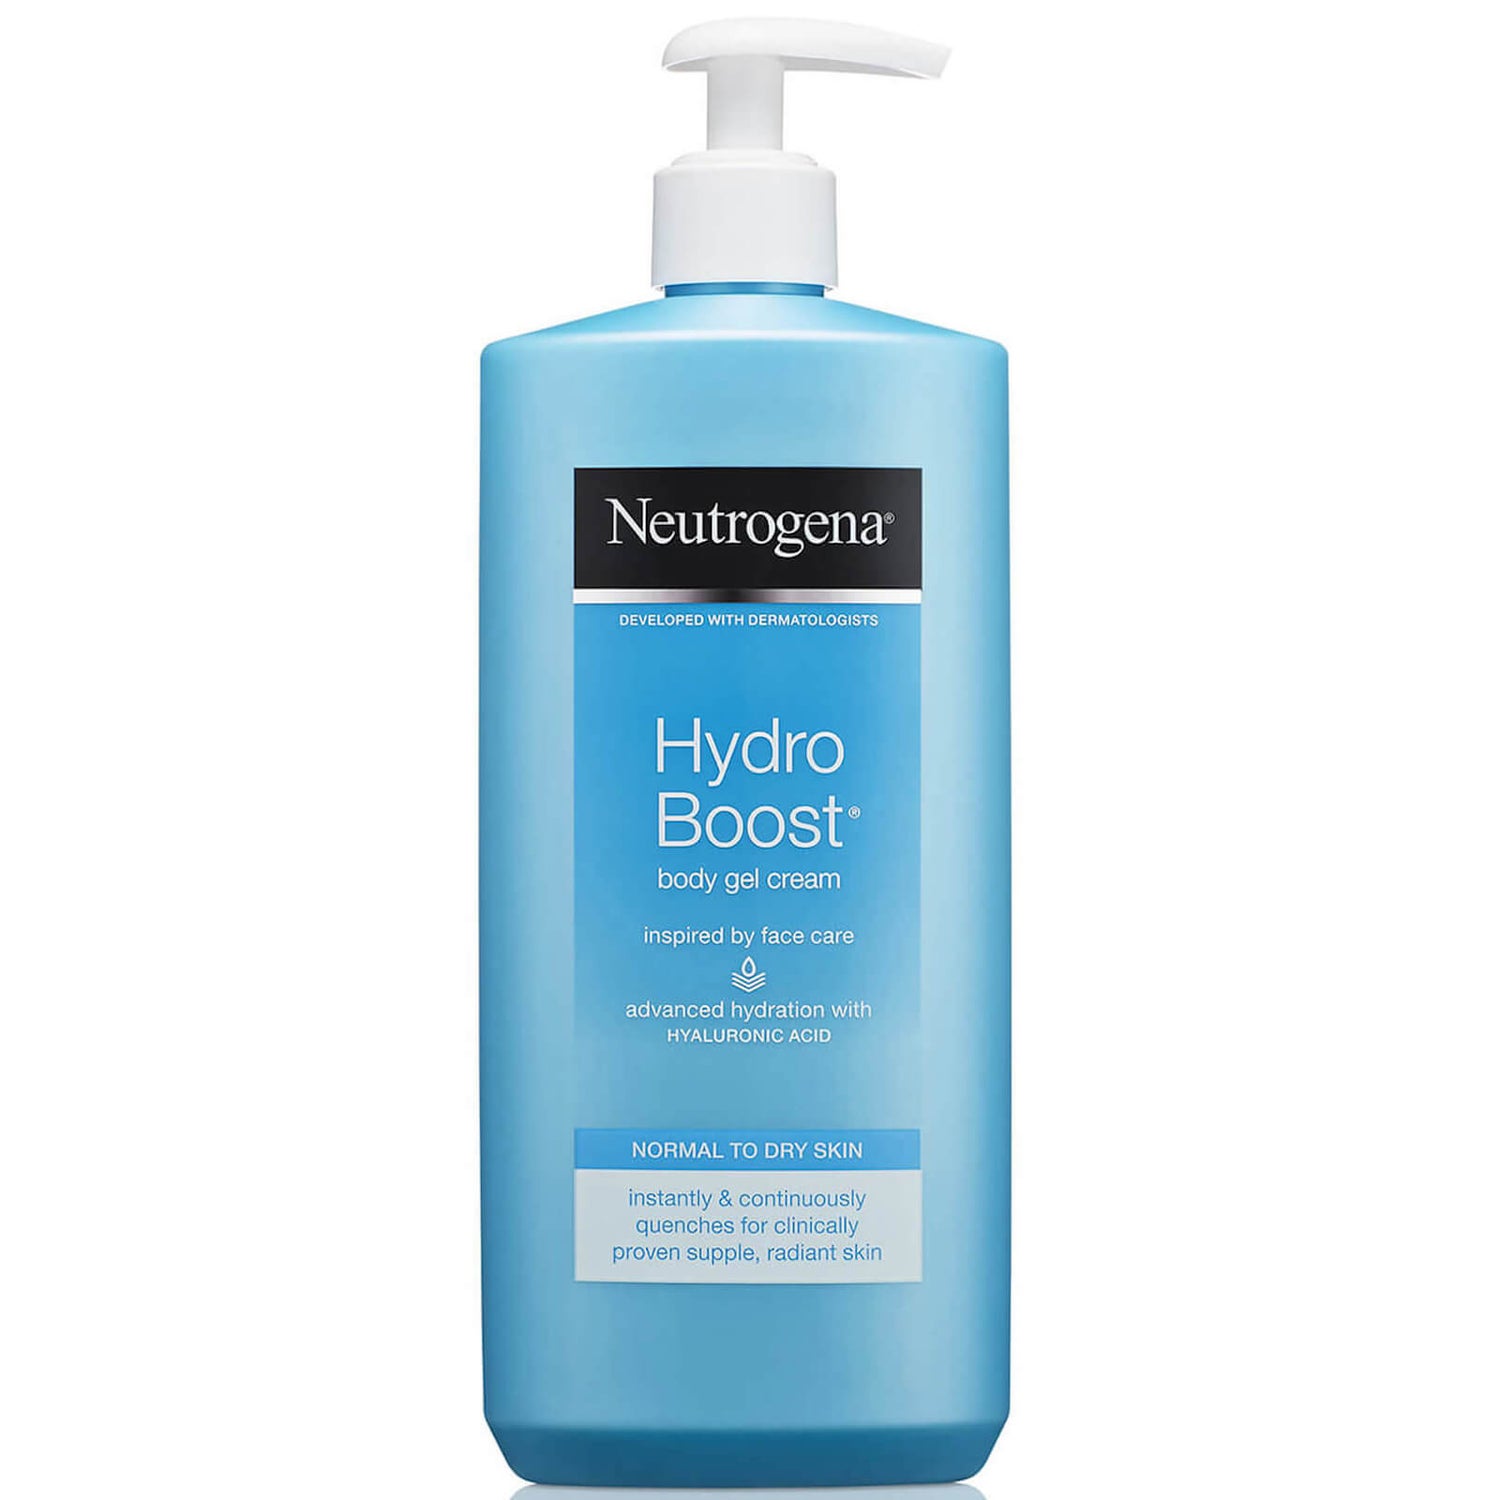 Creme em Gel Hidratante Corporal Neutrogena Hydro Boost 400 ml